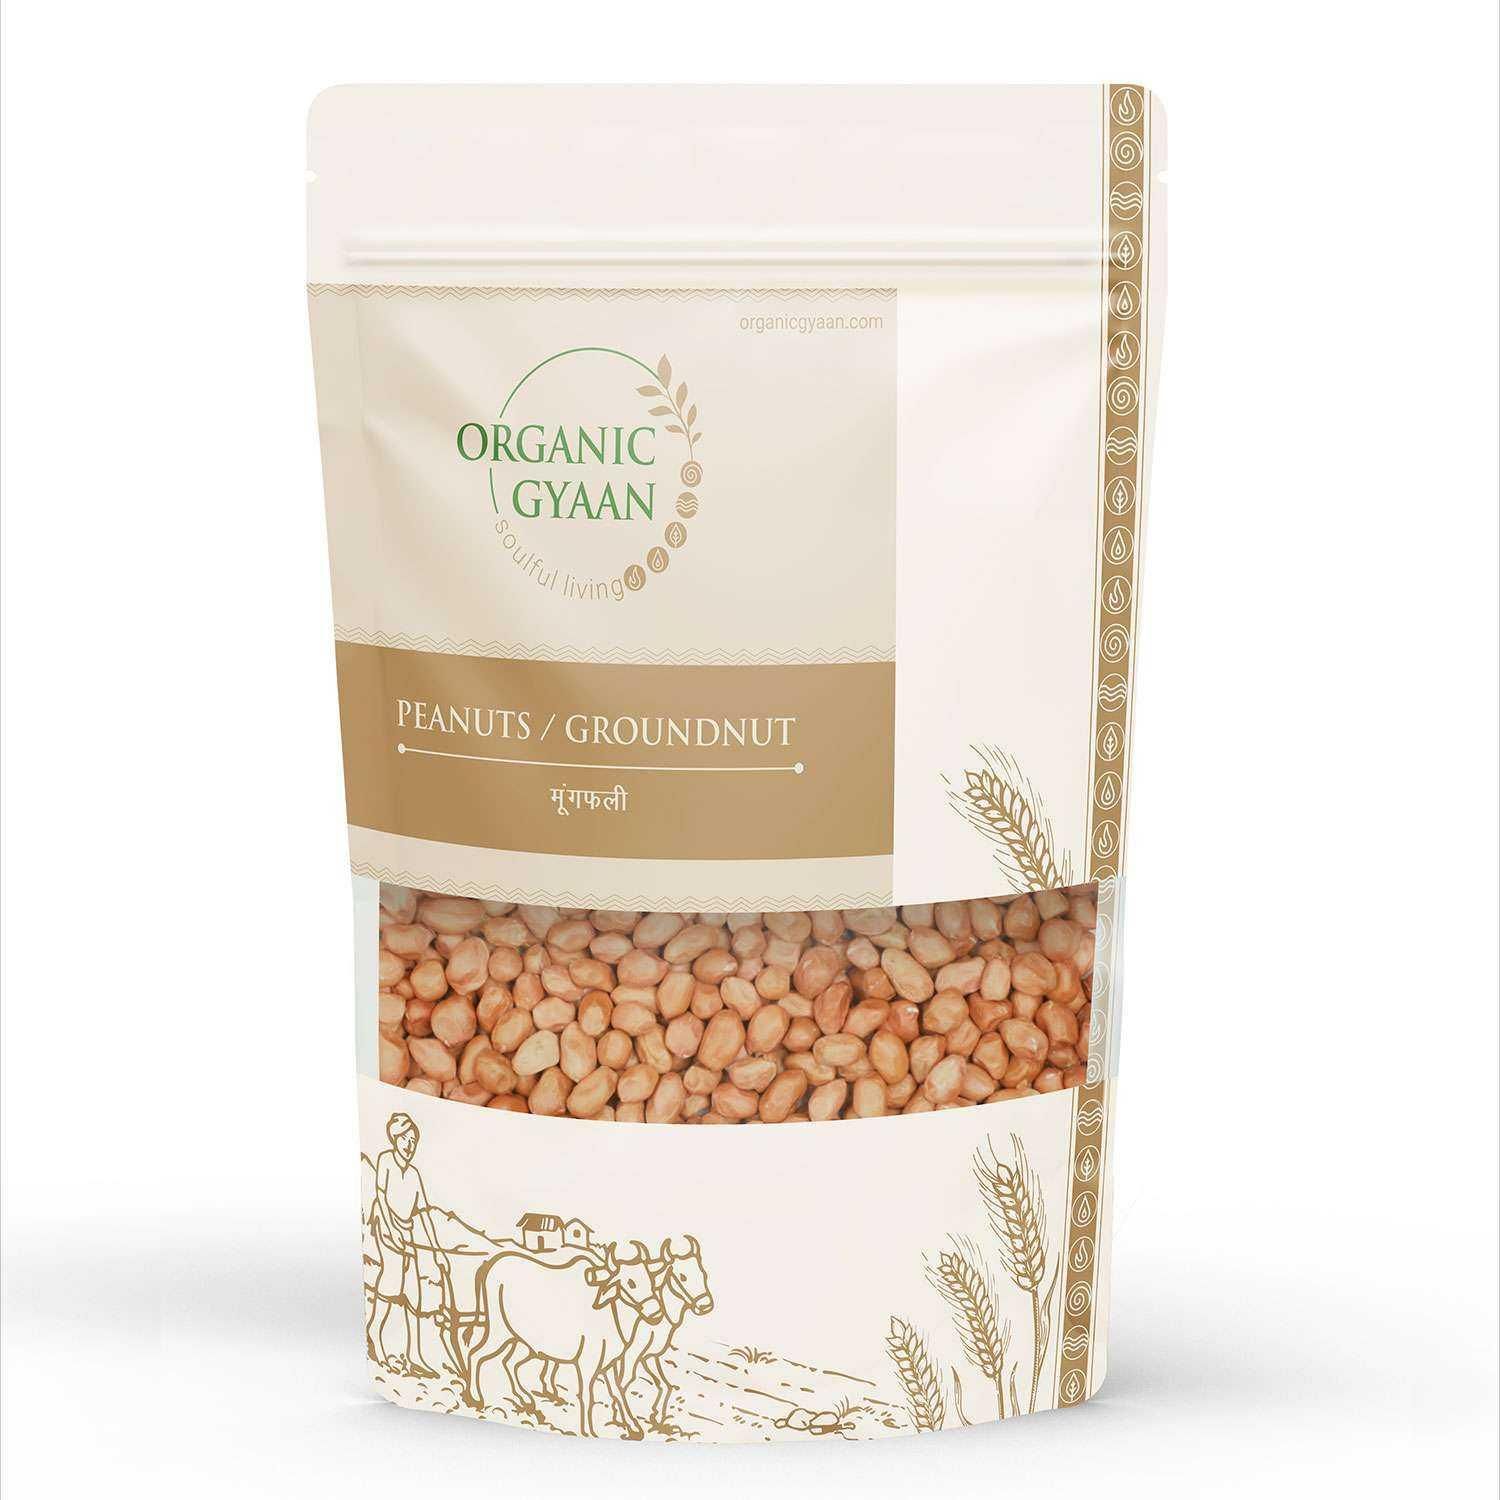 Organic Gyaan Peanuts/Groundnut 450gm